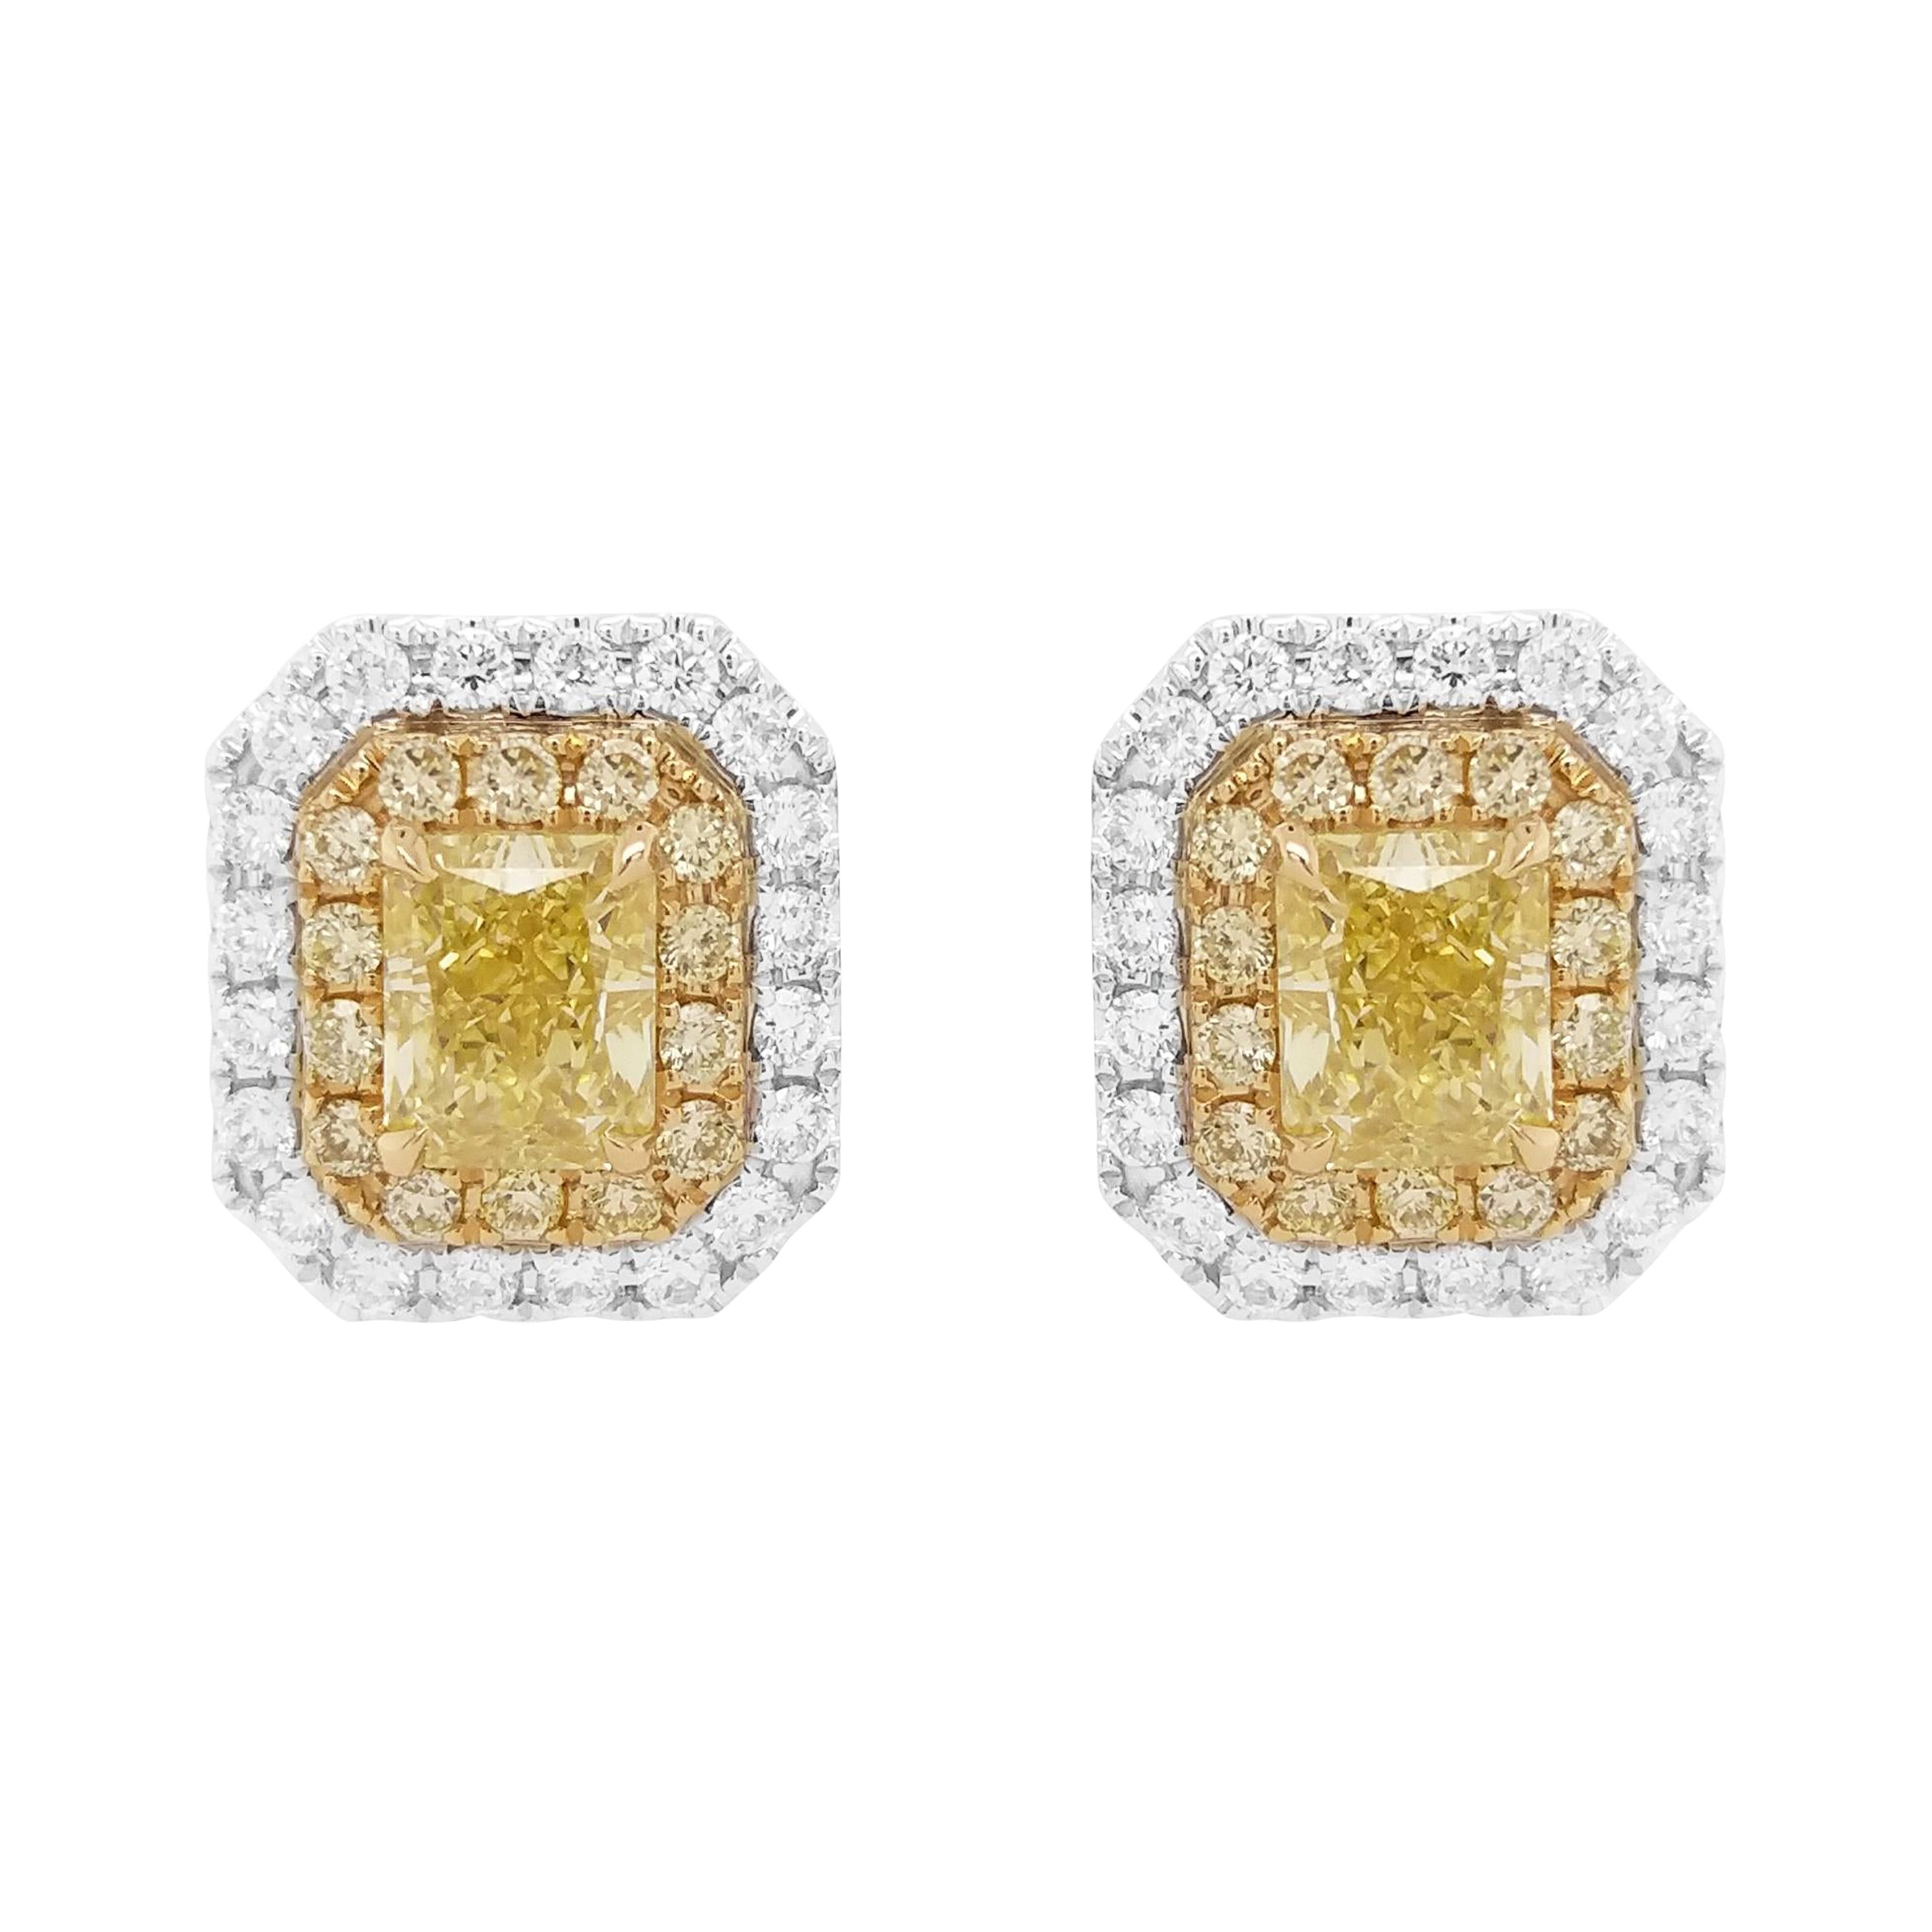 Black white and yellow shockers diamond stud earrings